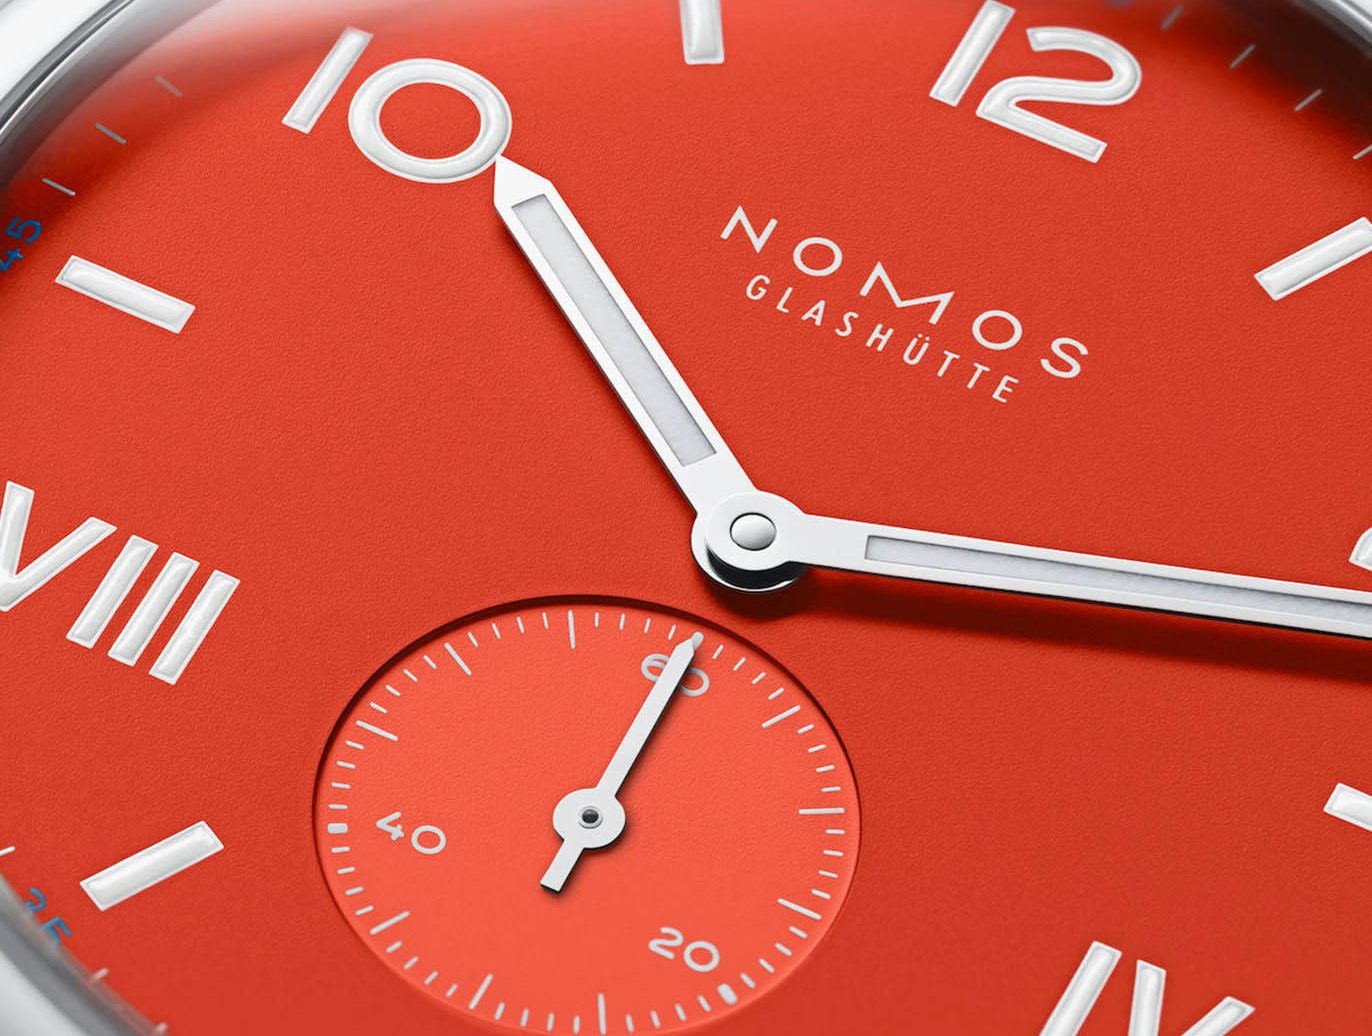 Nomos Glashutte Is the Niche Watch to Own